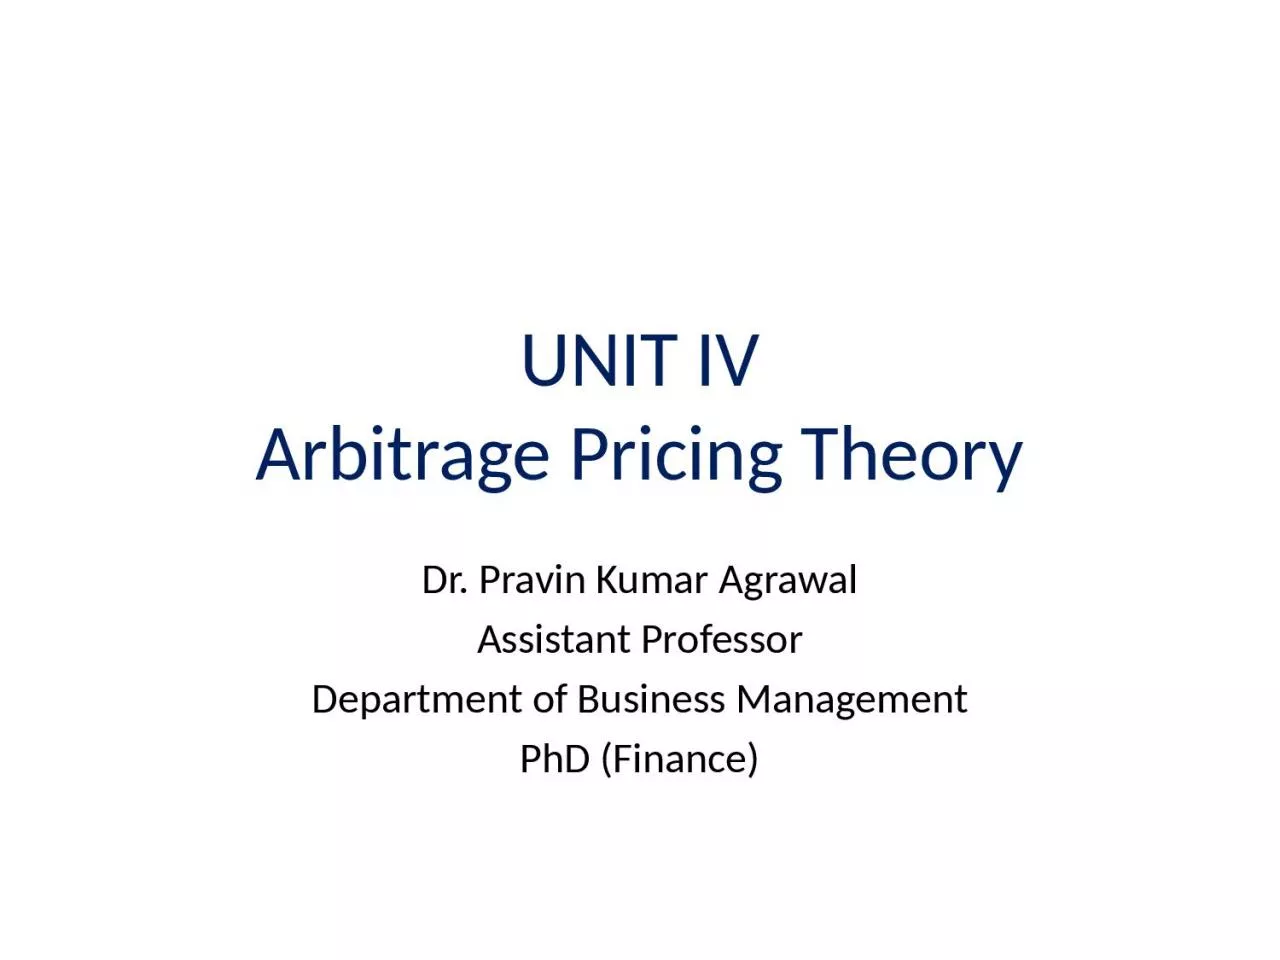 UNIT IV Arbitrage Pricing Theory